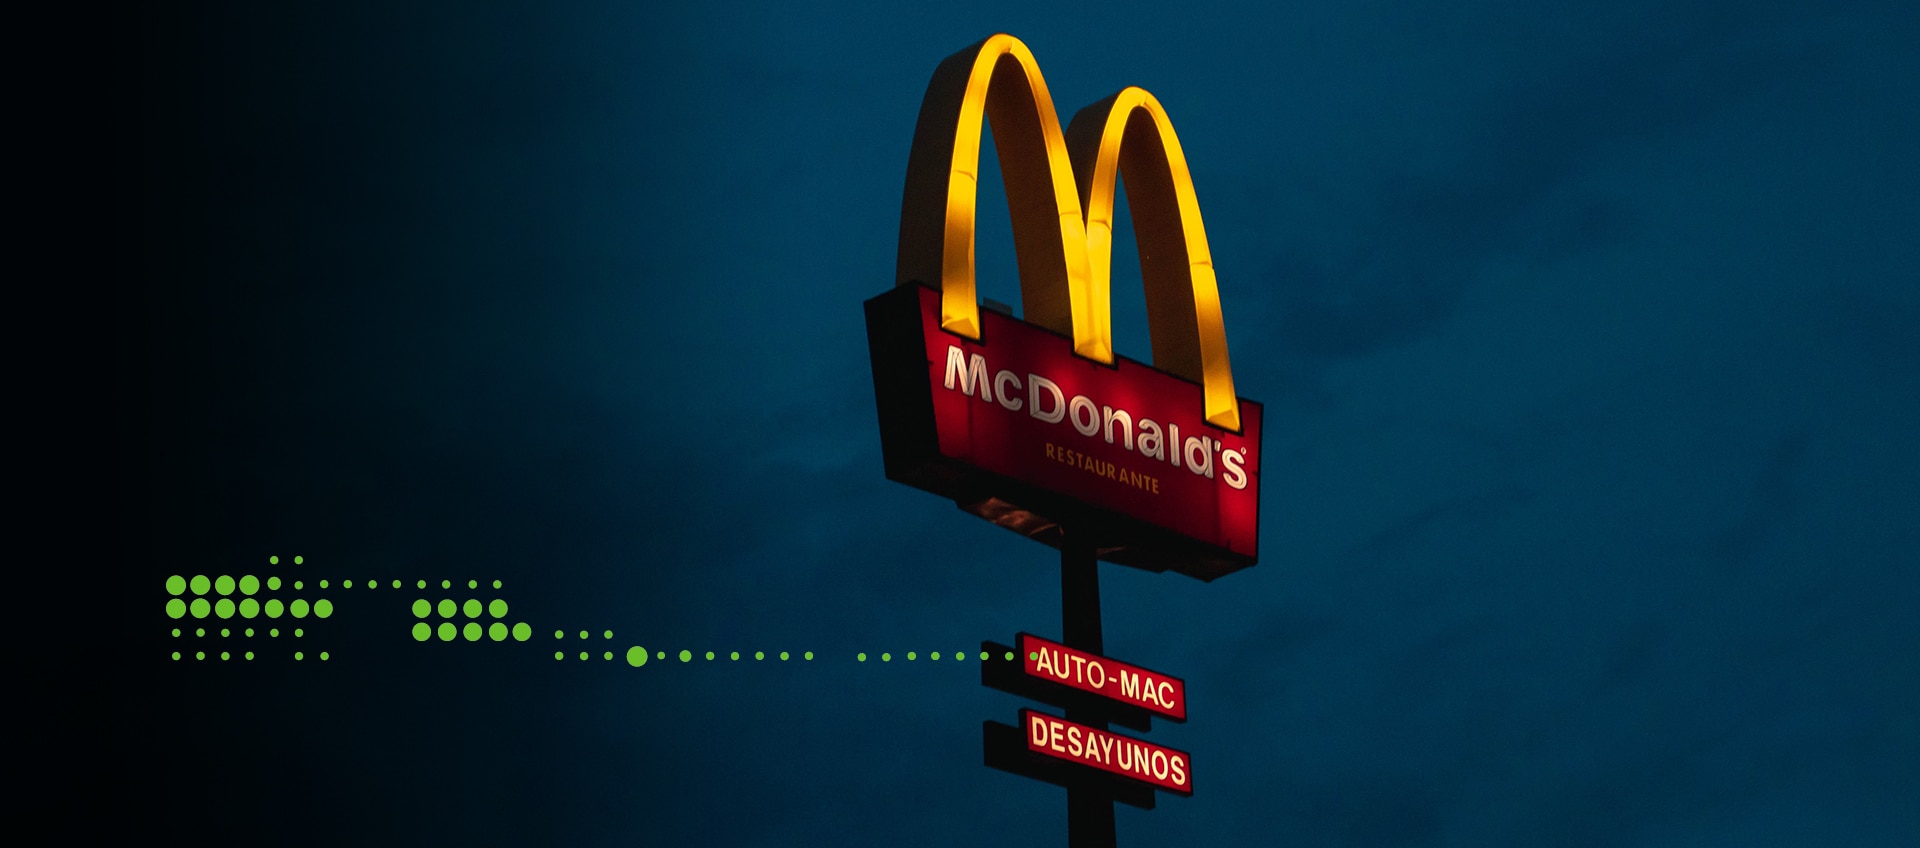 McDonalds M sign at night 